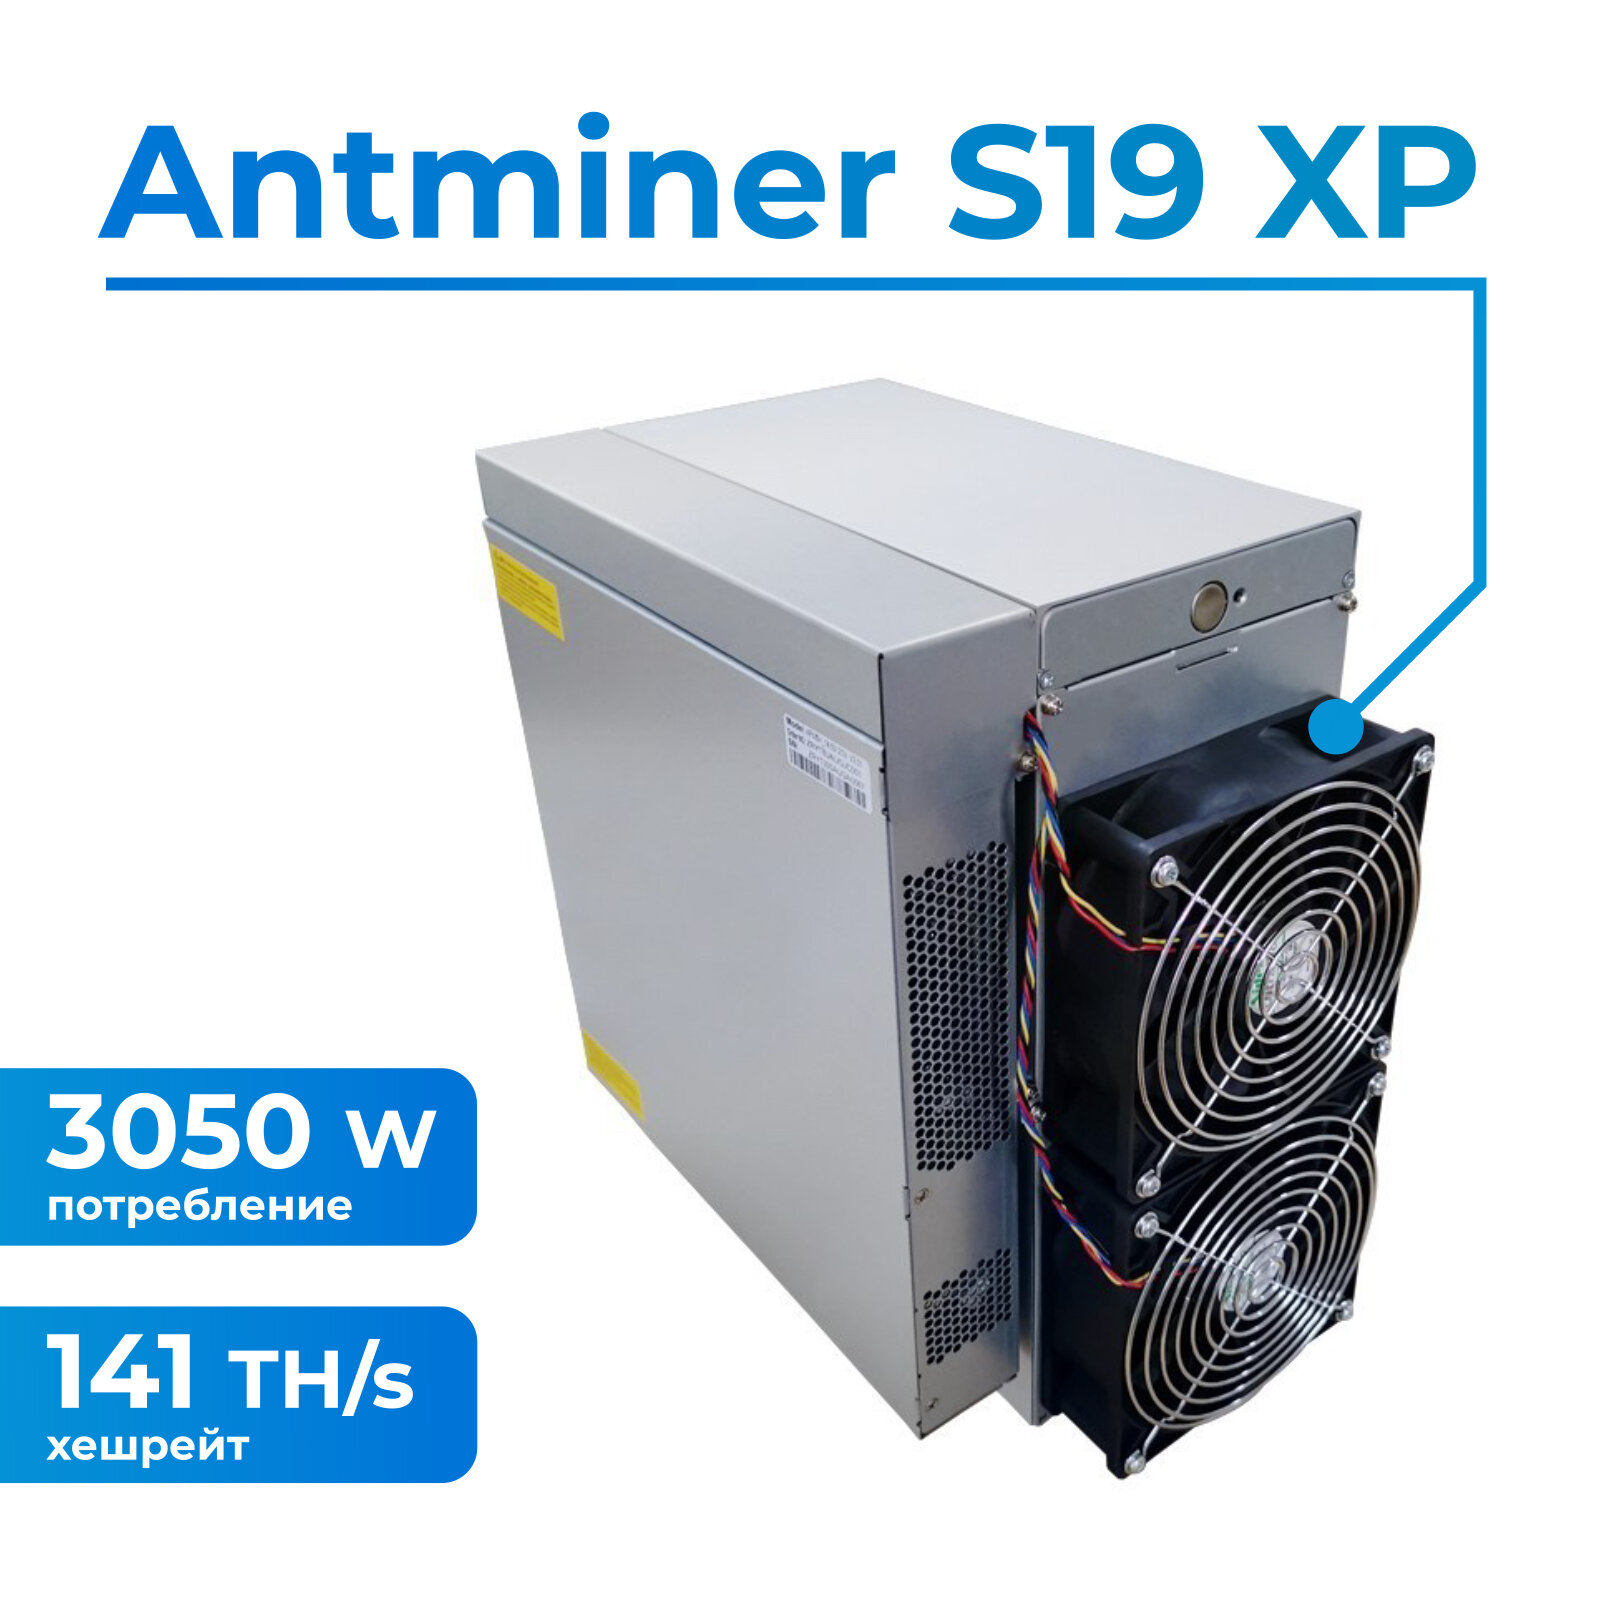 Asic-майнер Bitmain Antminer S19 XP 141TH/s + 2 кабеля в комплекте